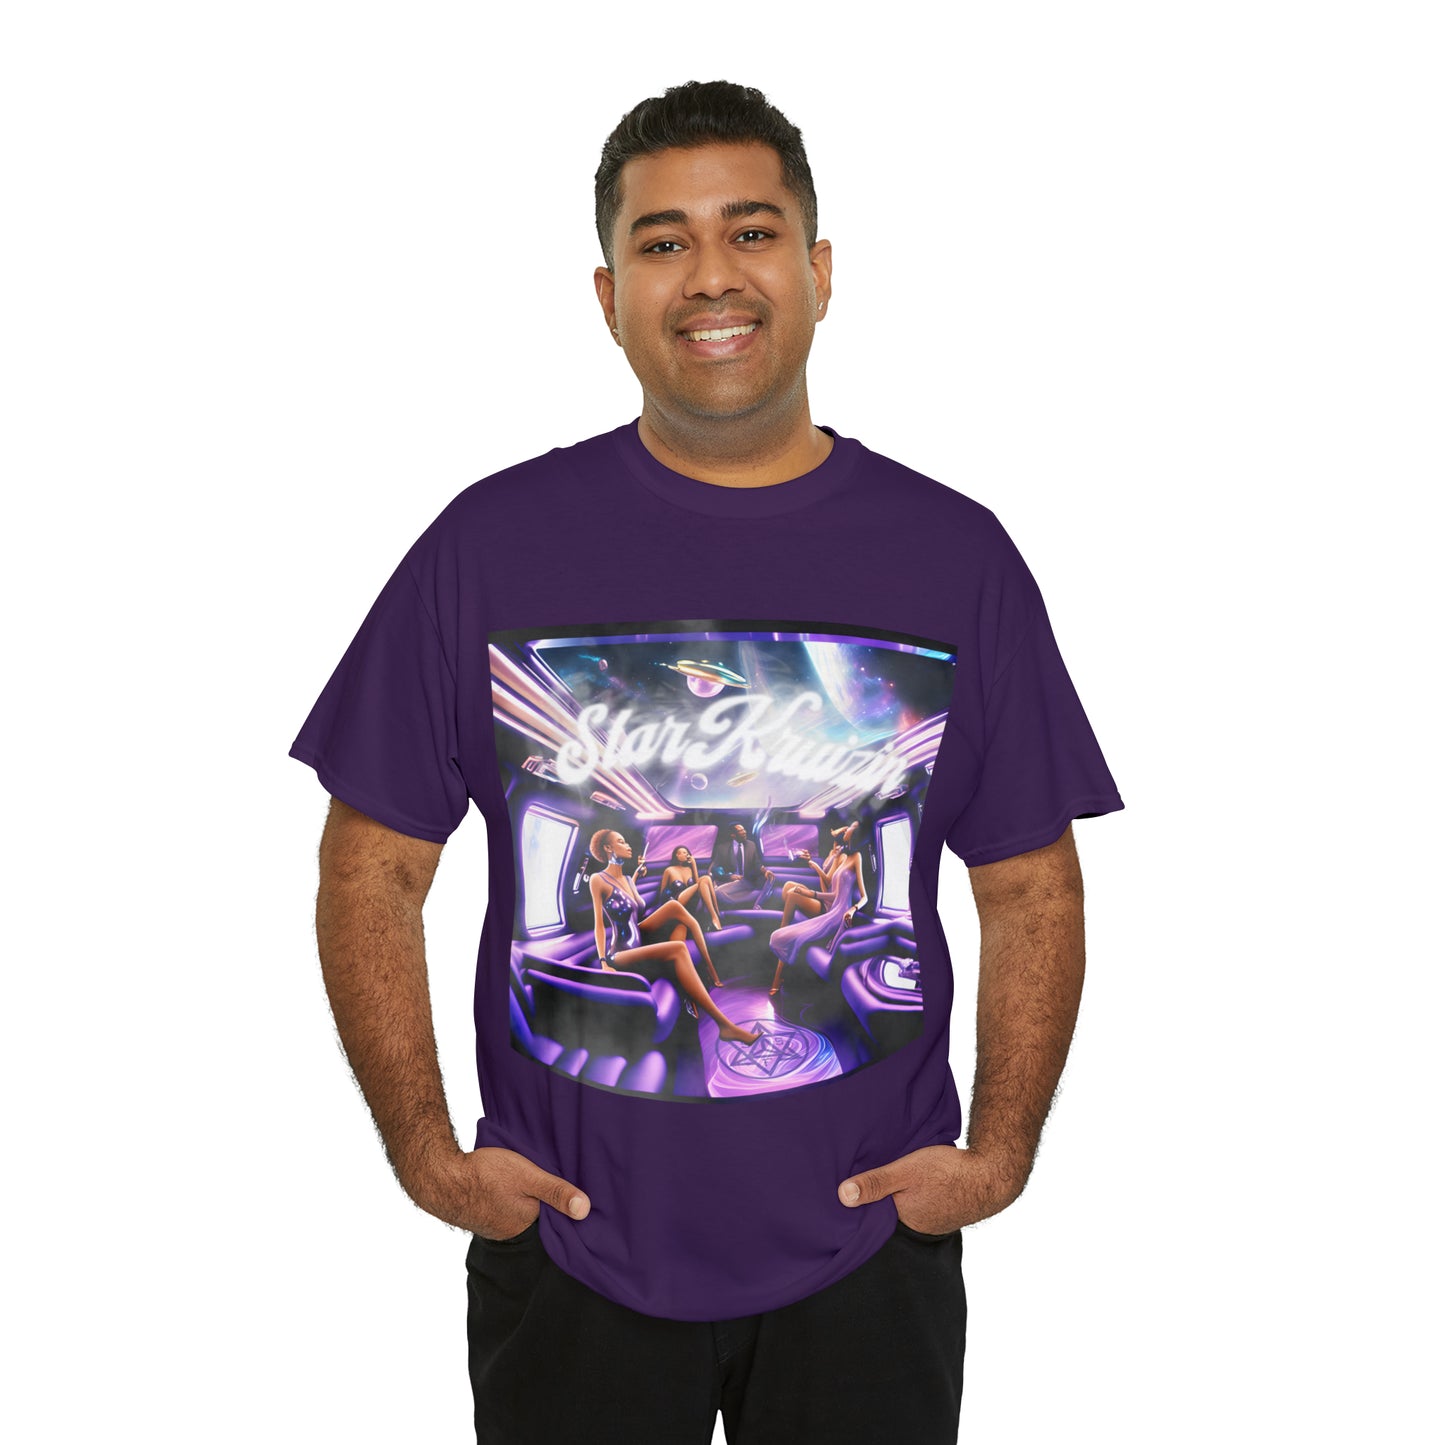 StarKruizin Album T-Shirt in Black or Purple